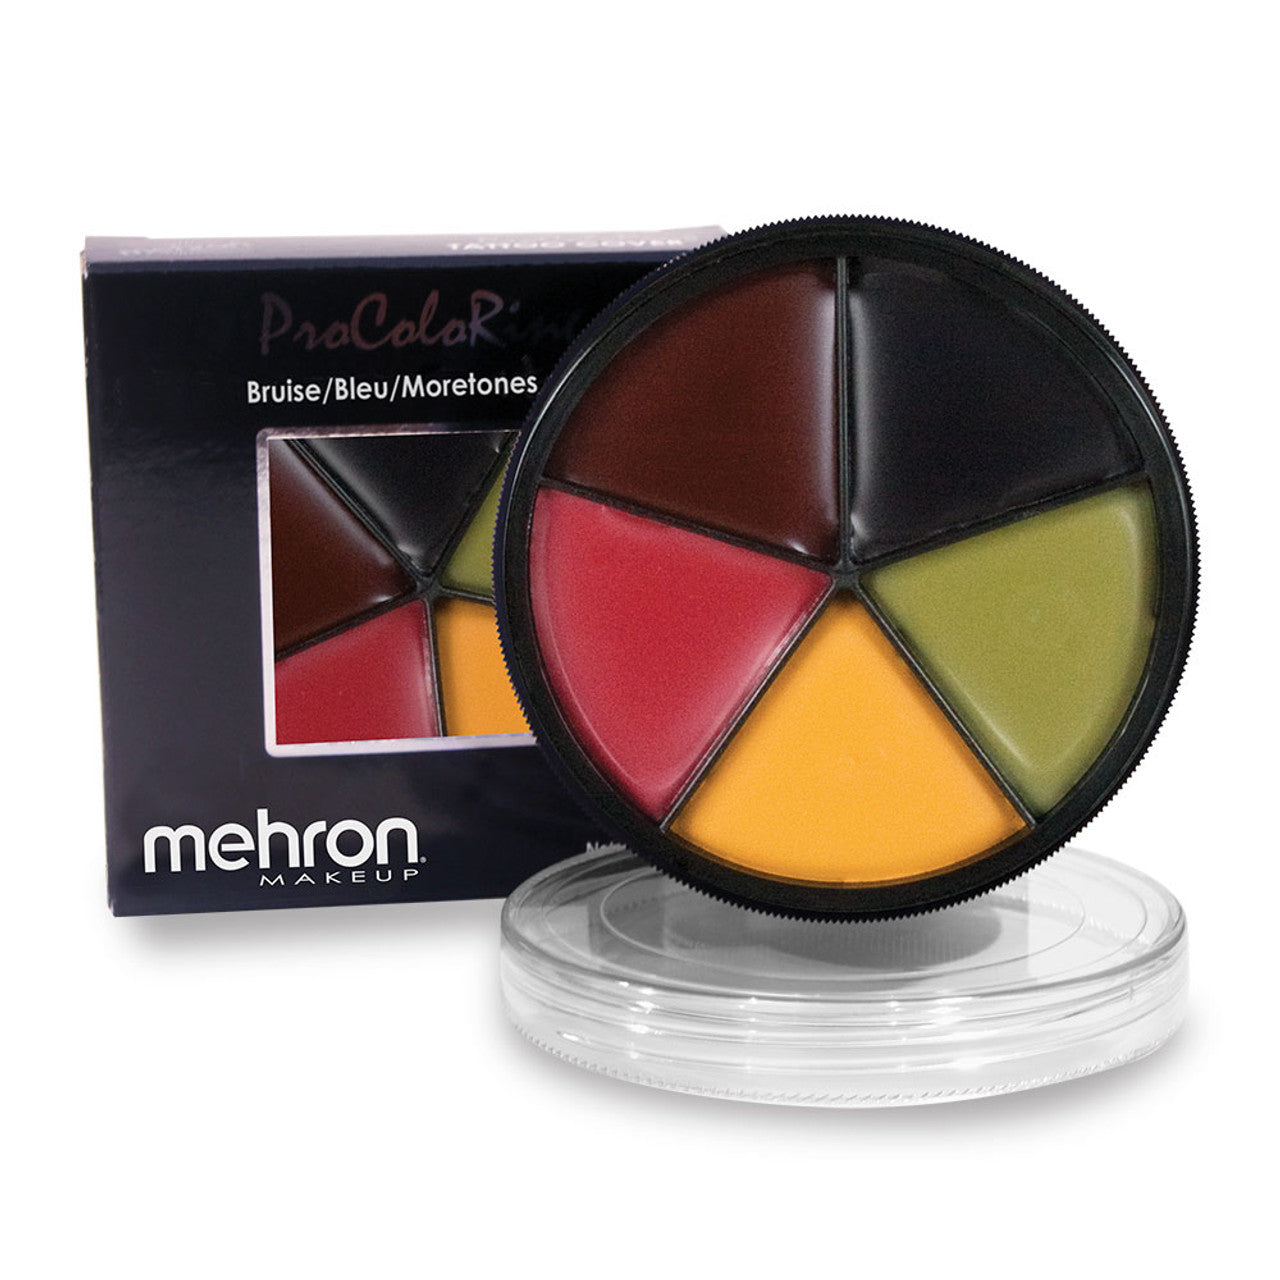 Mehron makeup ProColoRing™ Bruise